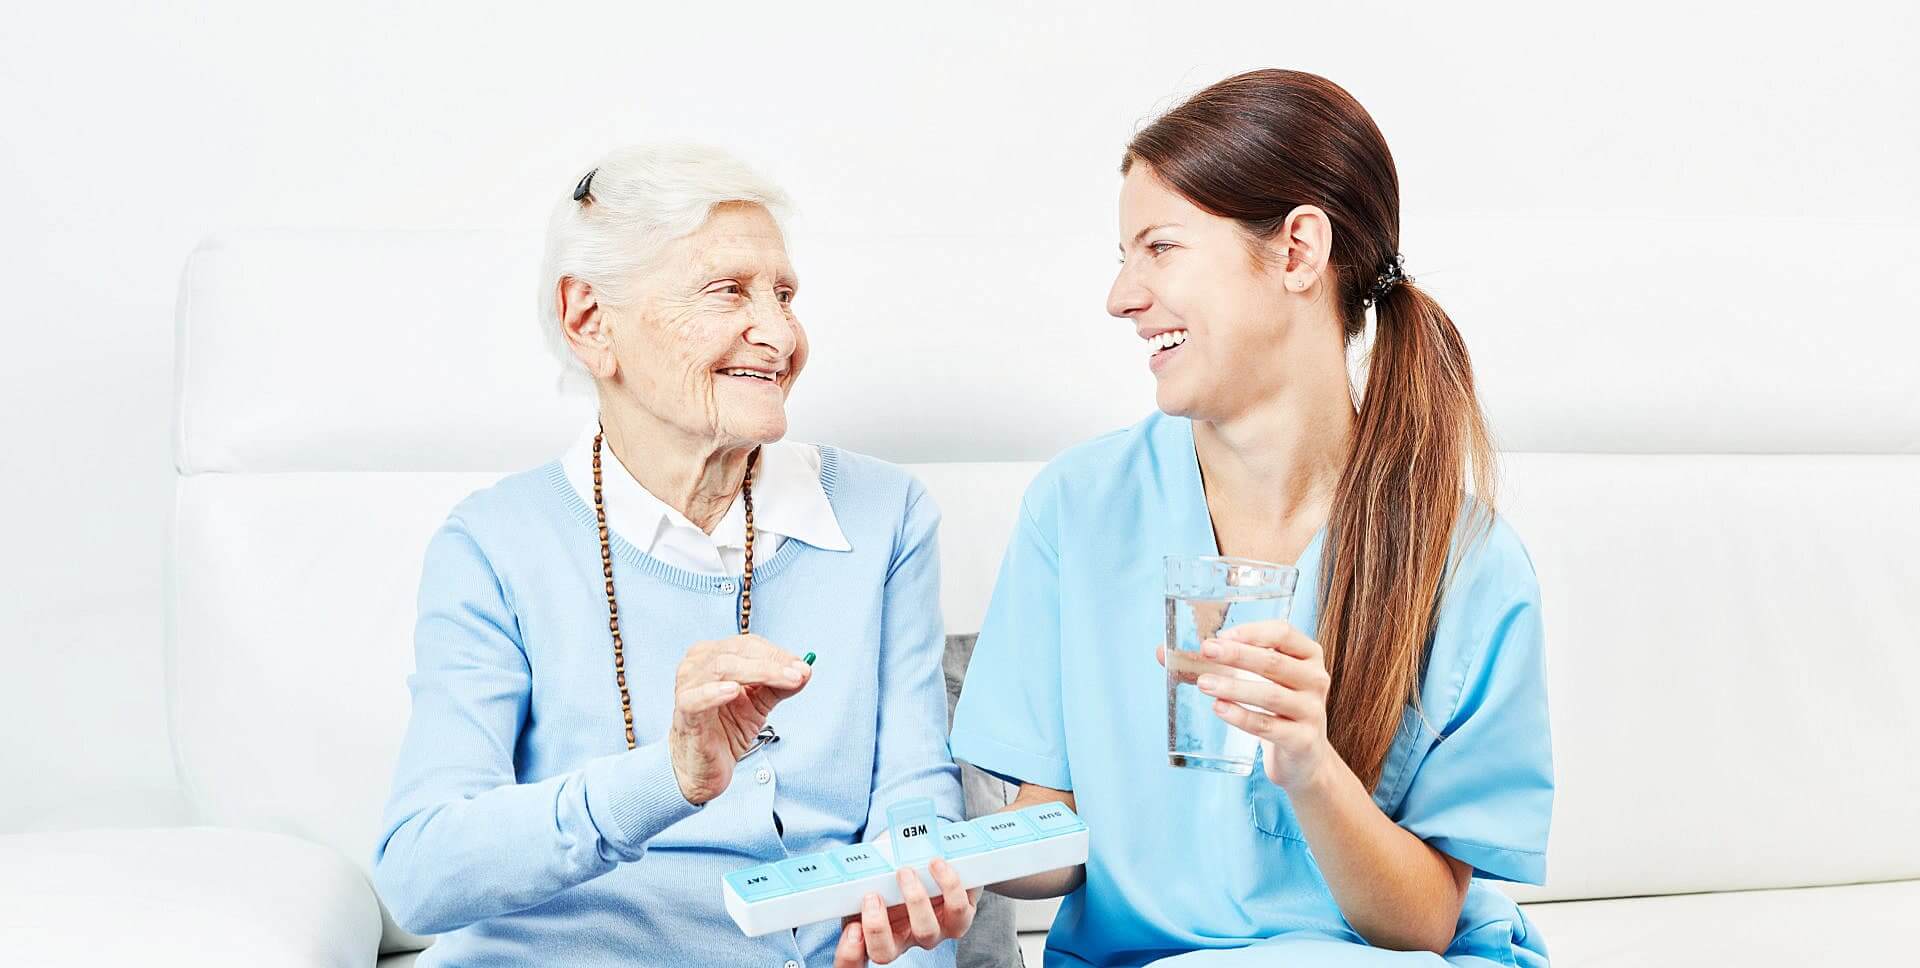 caregiver and senior woman smiling